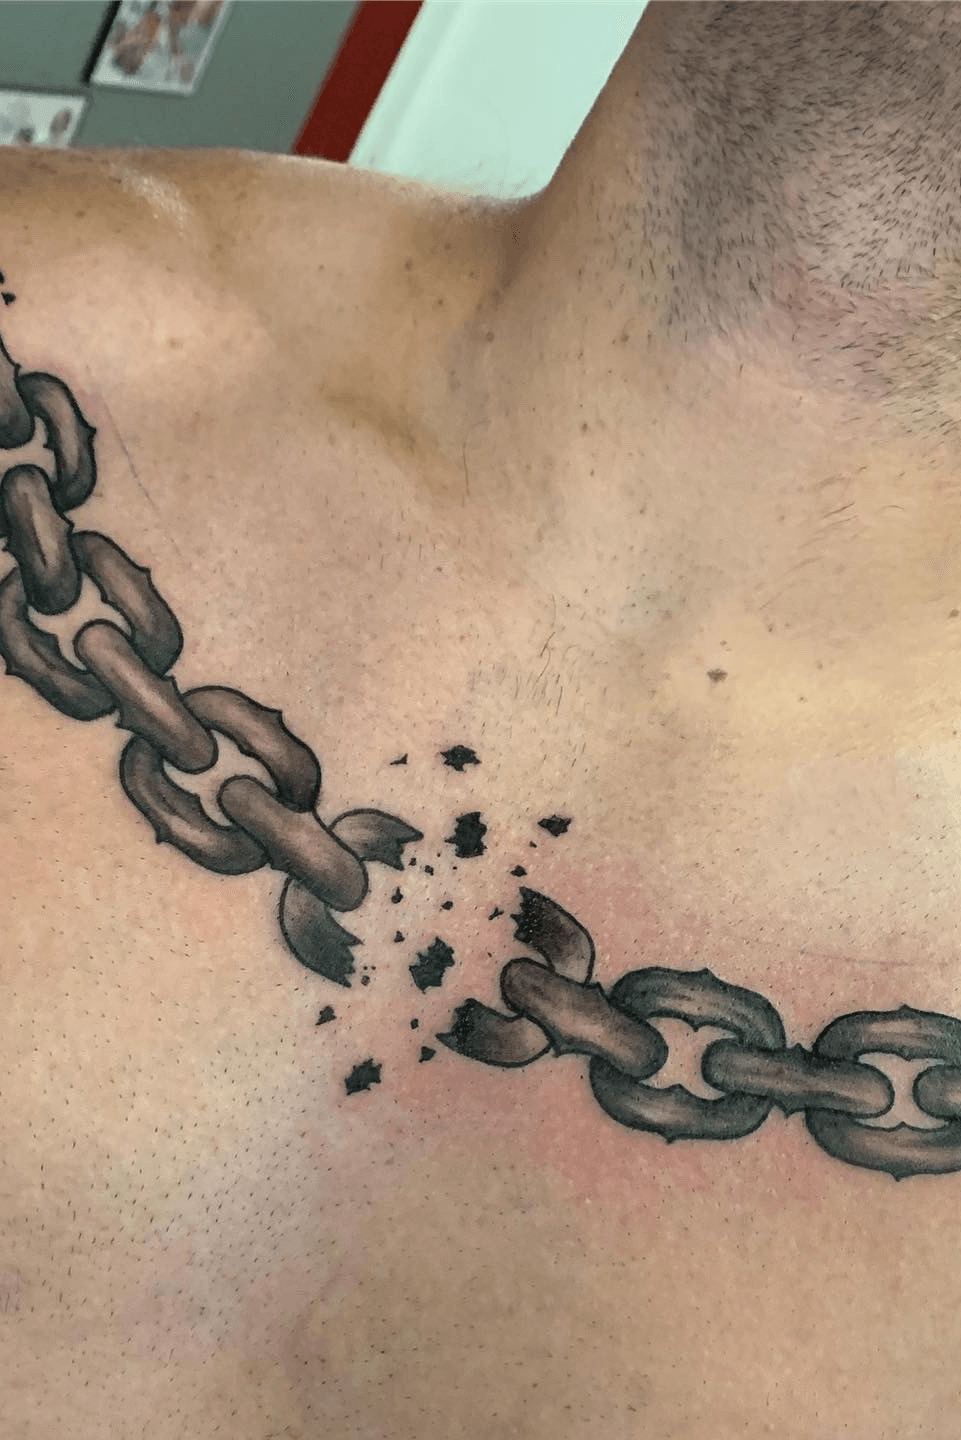 Broken chain tattoo